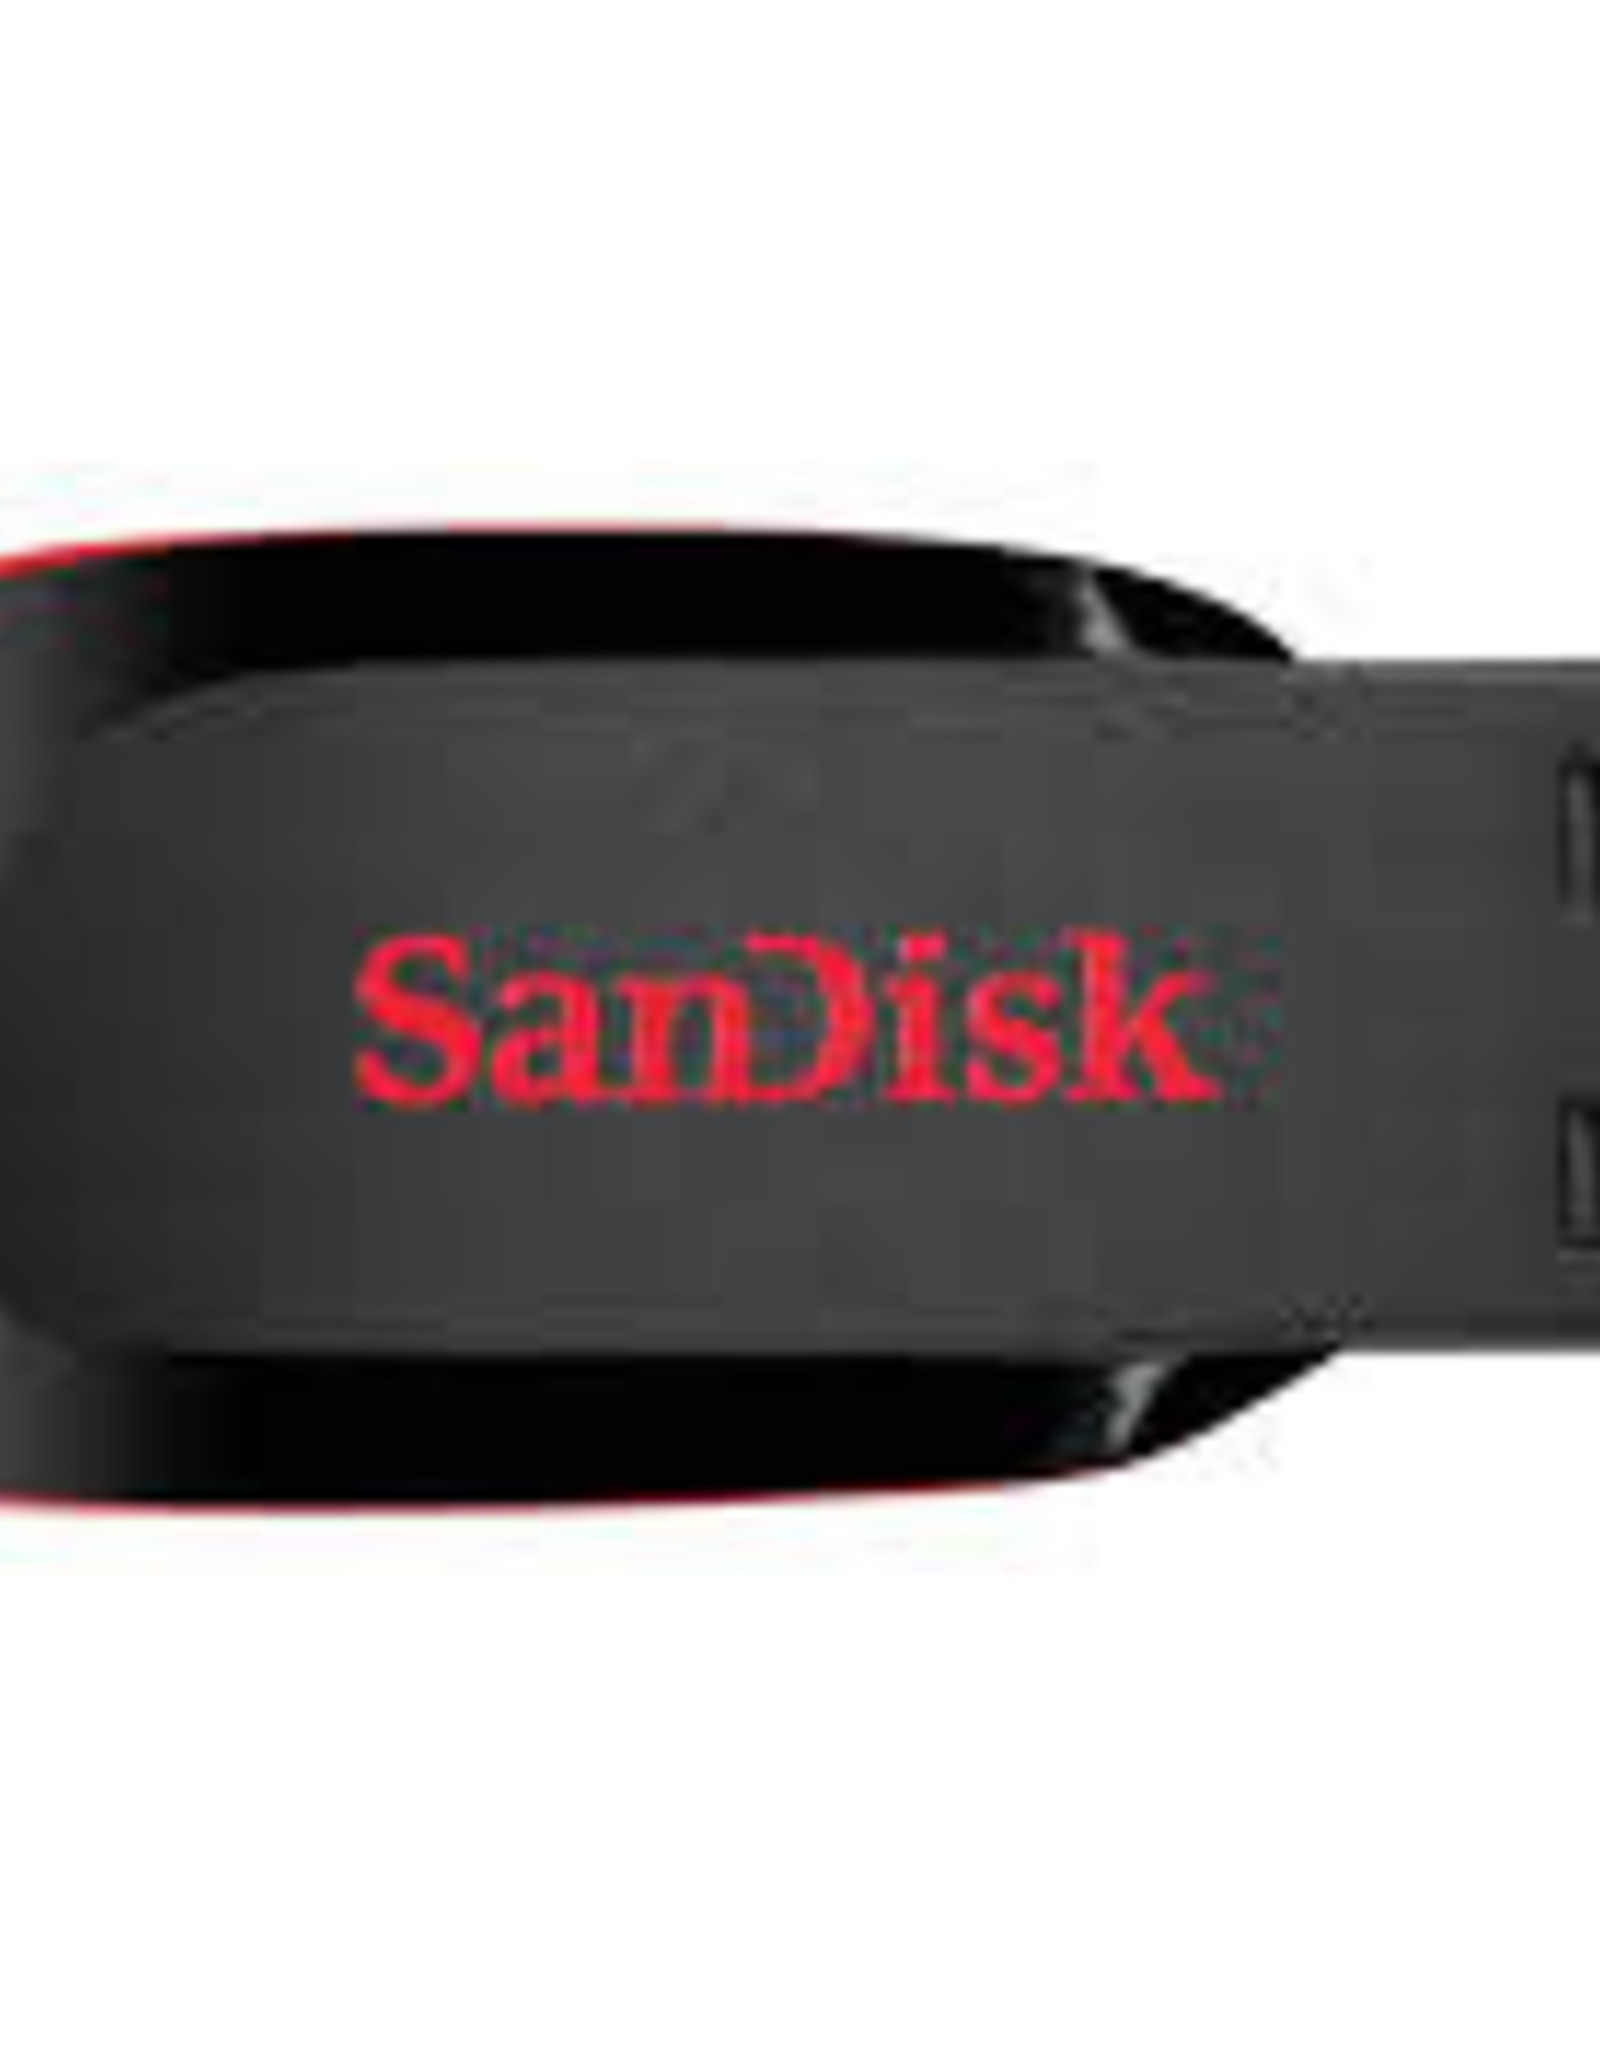 SANDISK 128GB CRUZER BLADE USB 2.0 DRIVE